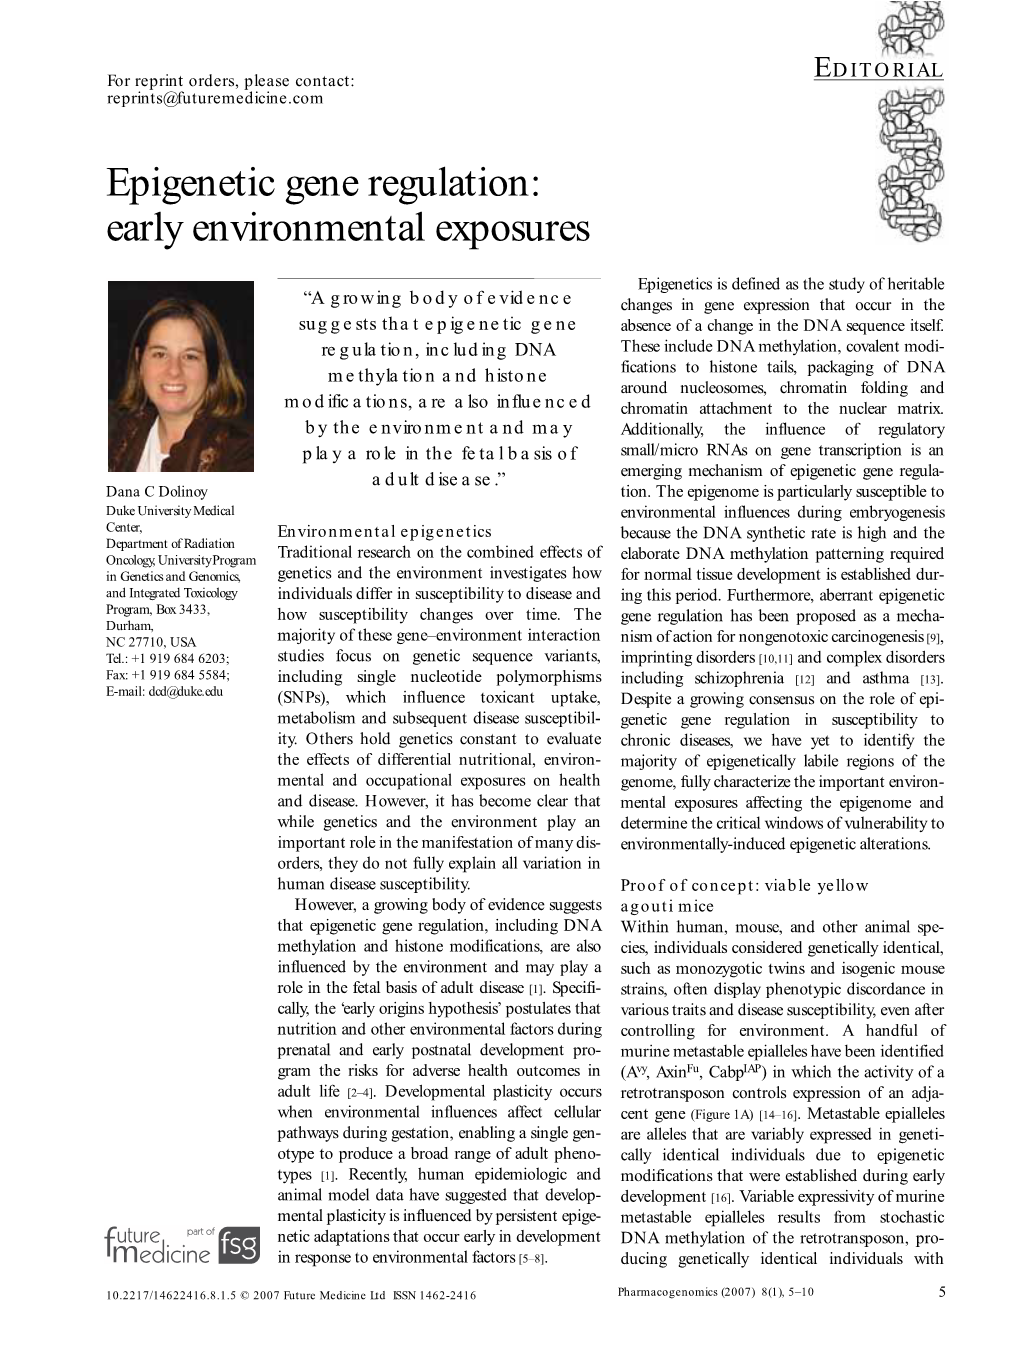 Epigenetic Gene Regulation: Early Environmental Exposures